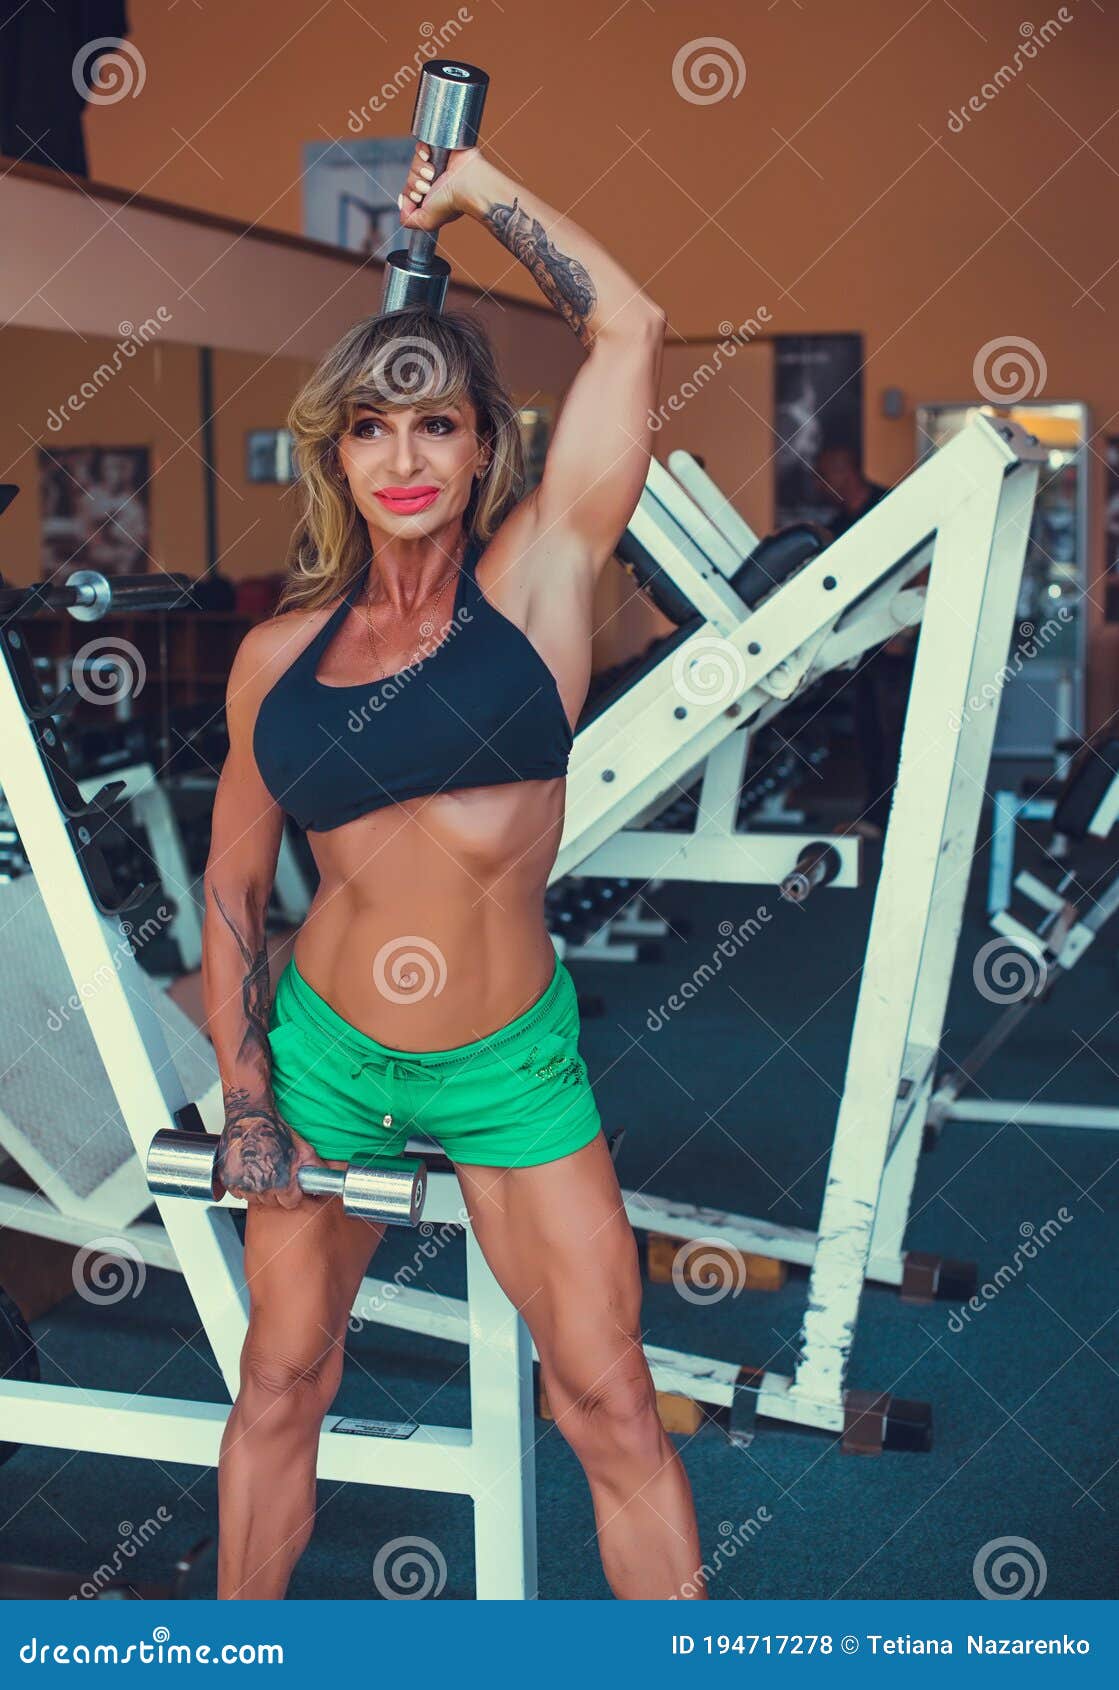 mature gym selfie photo